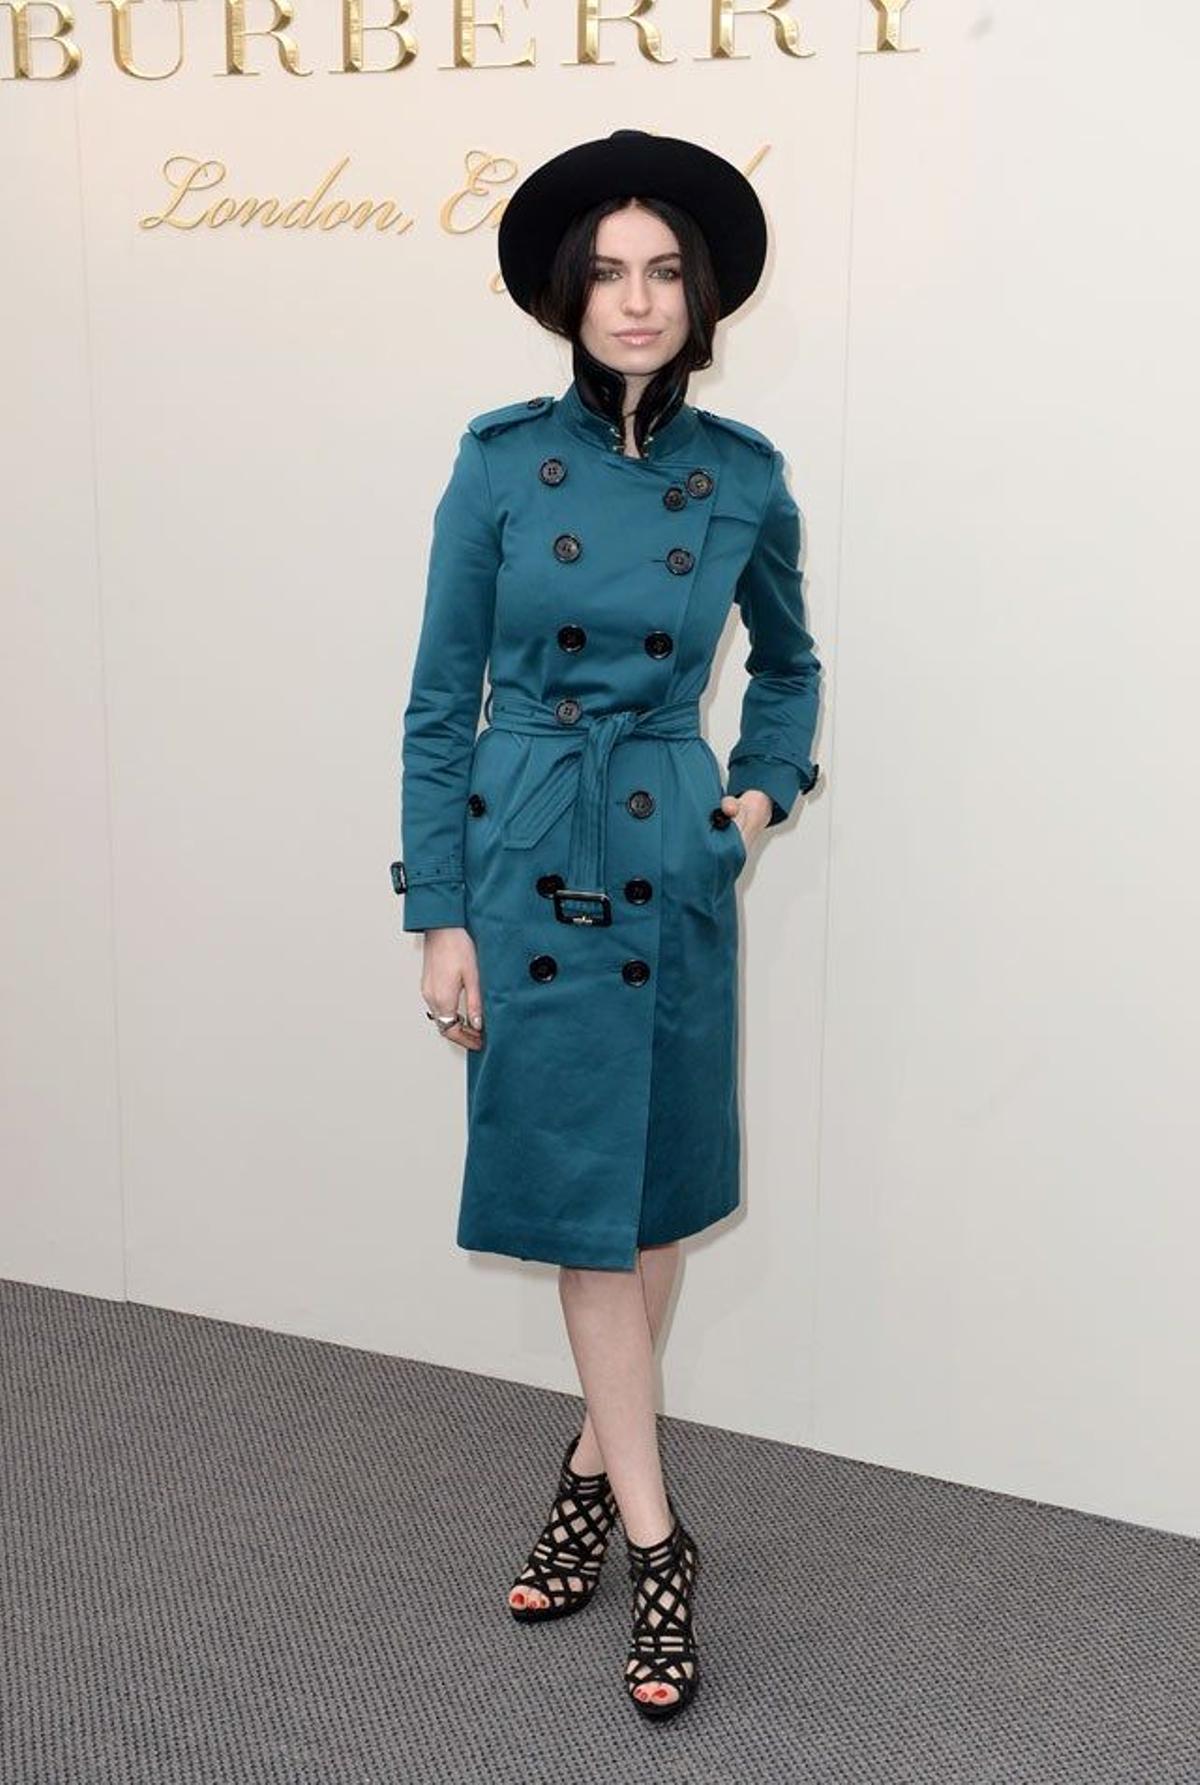 Tali Lennox va al desfile de Burberry Prorsum durante la Semana de la Moda de Londres.